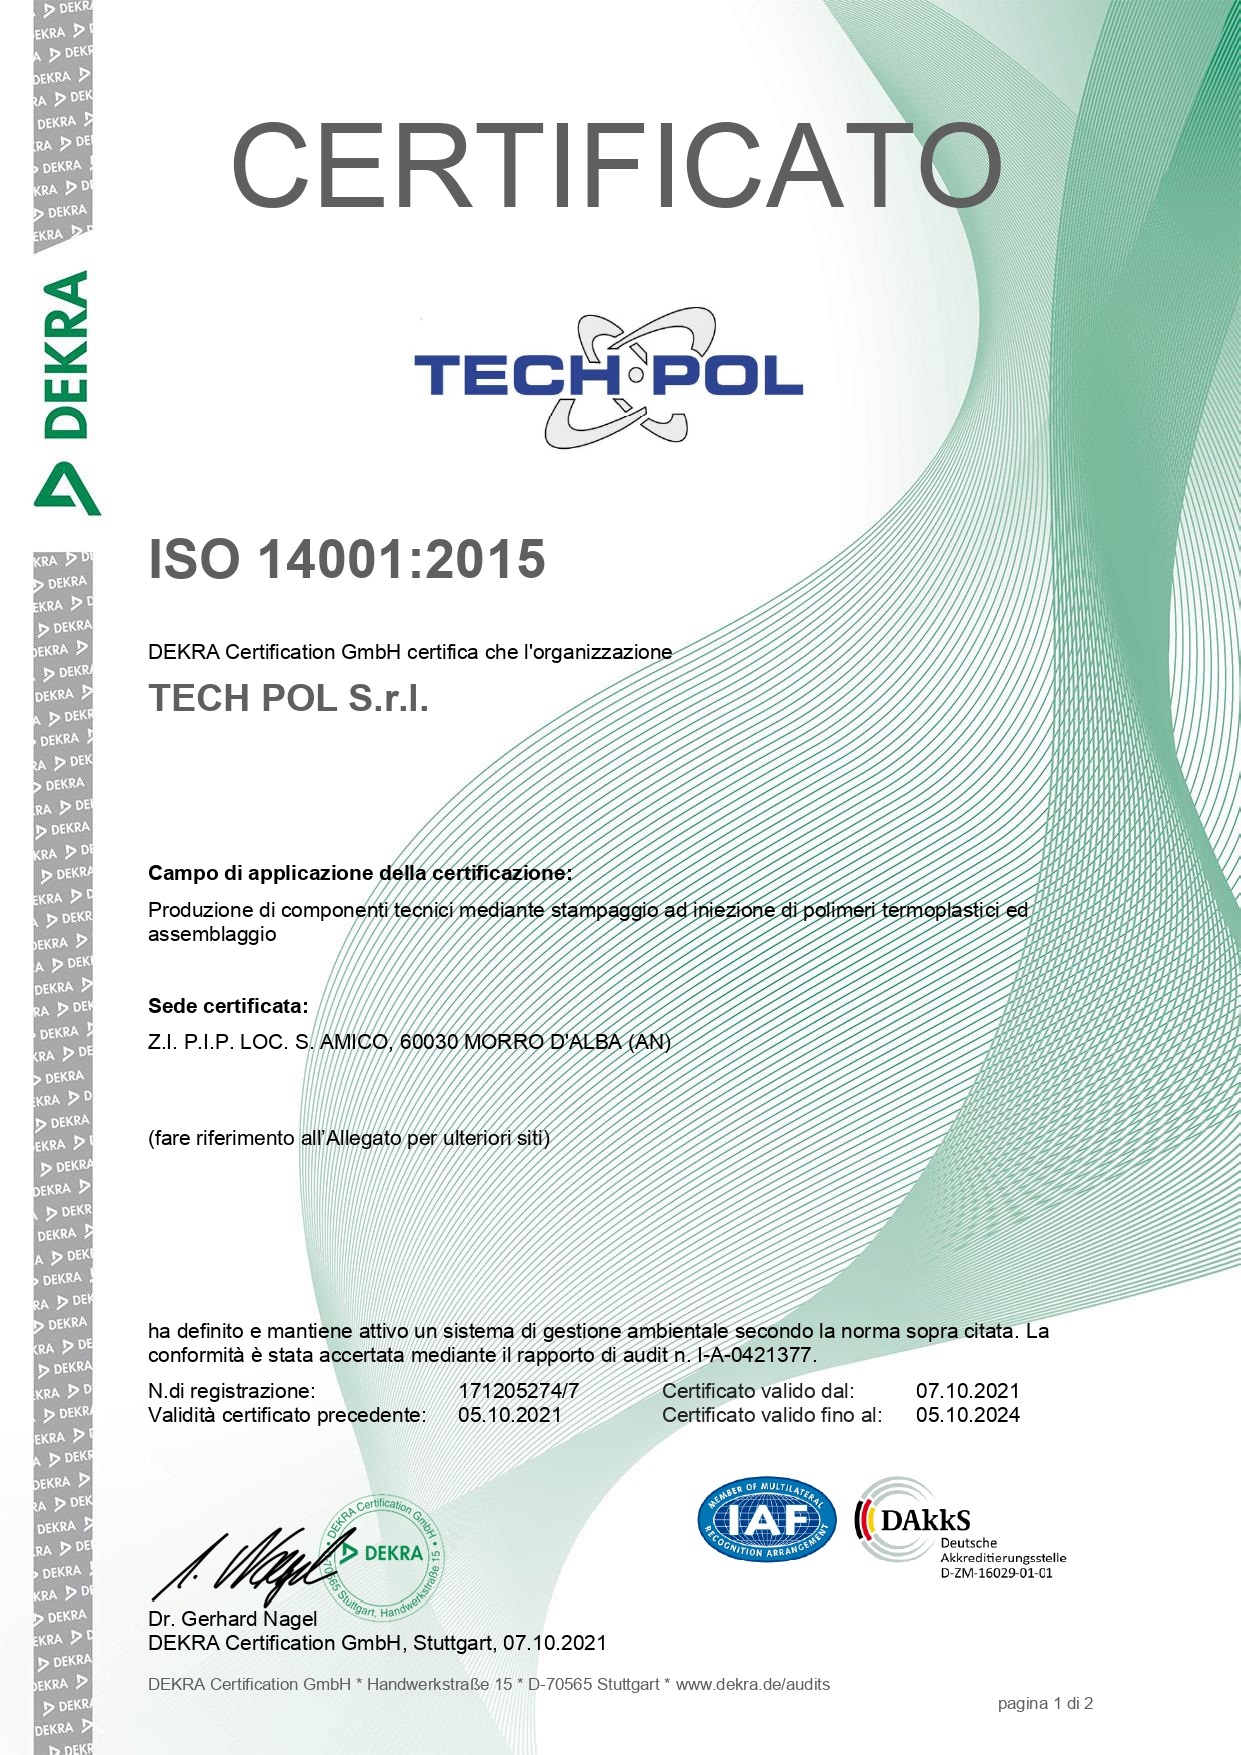 Certificazione UNI EN ISO 14001:2015 DEKRA